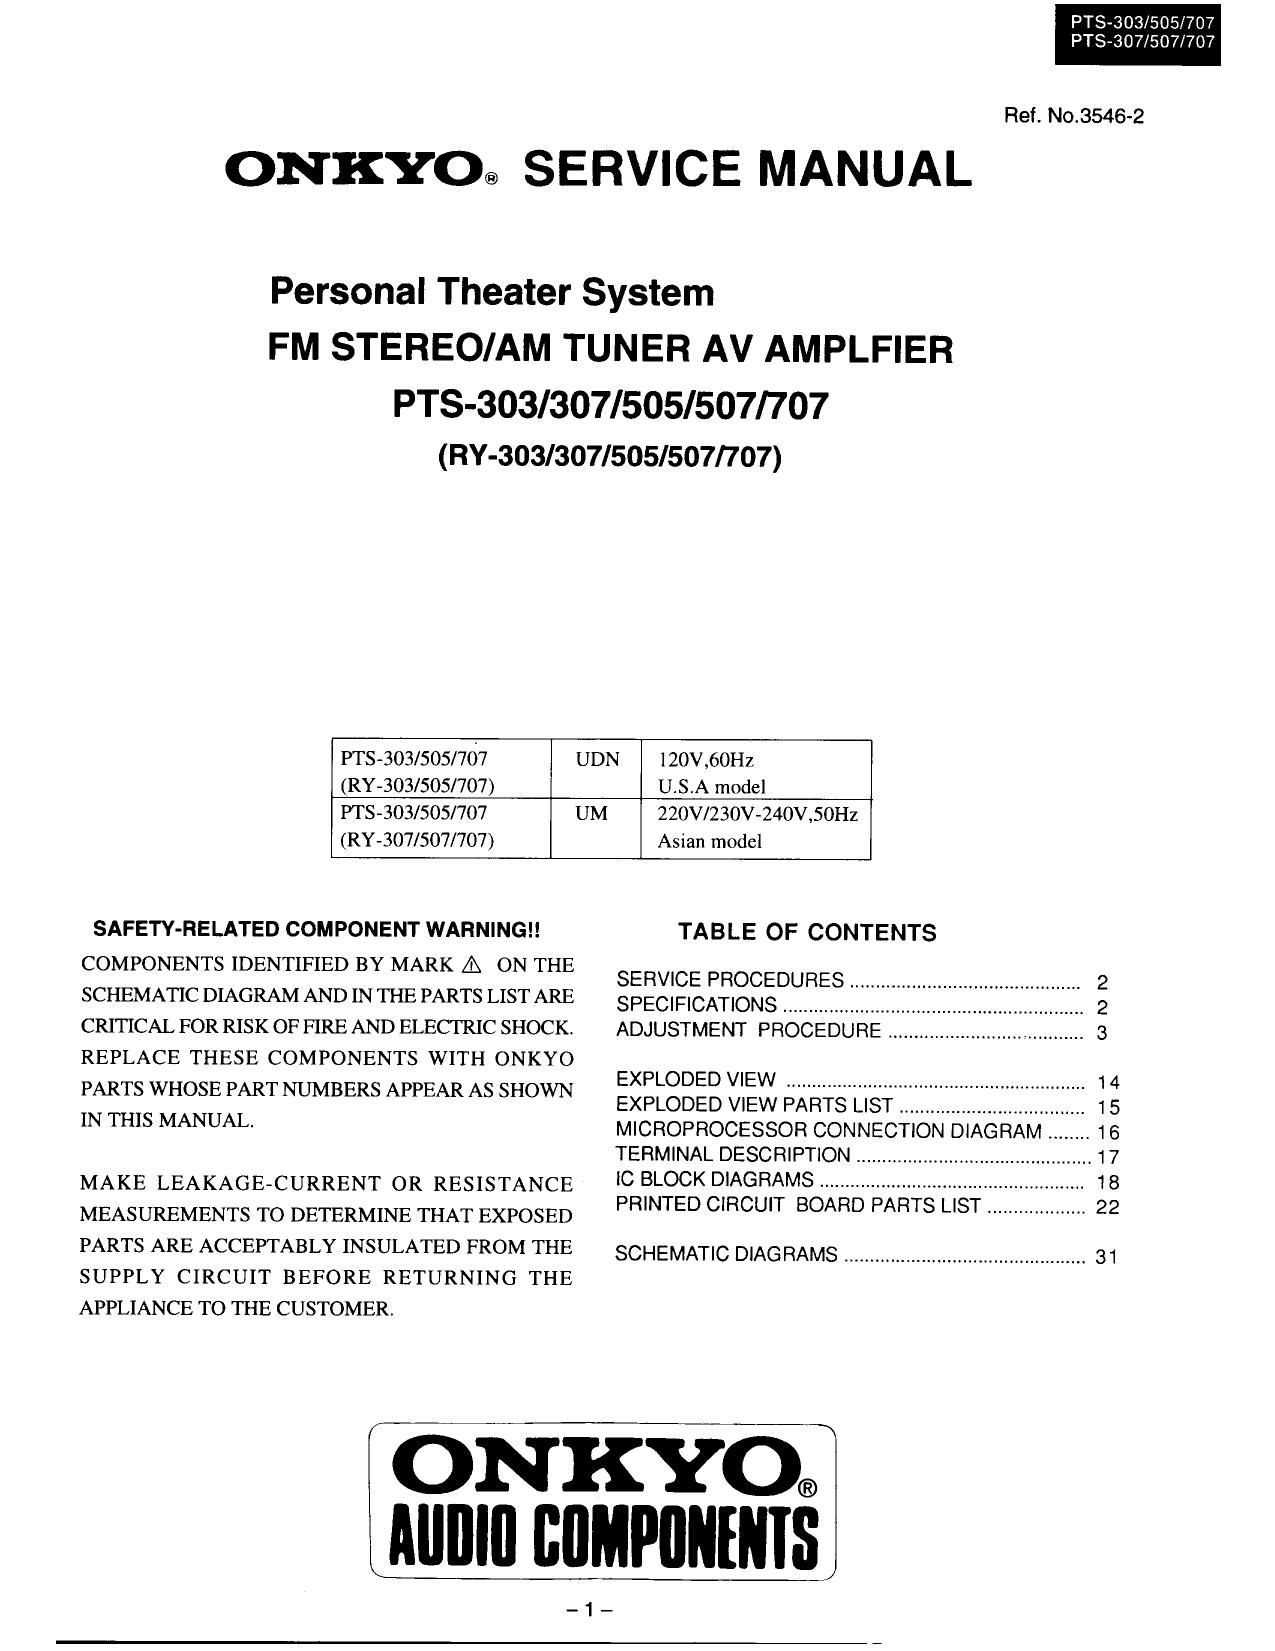 Onkyo PTS 305 Service Manual